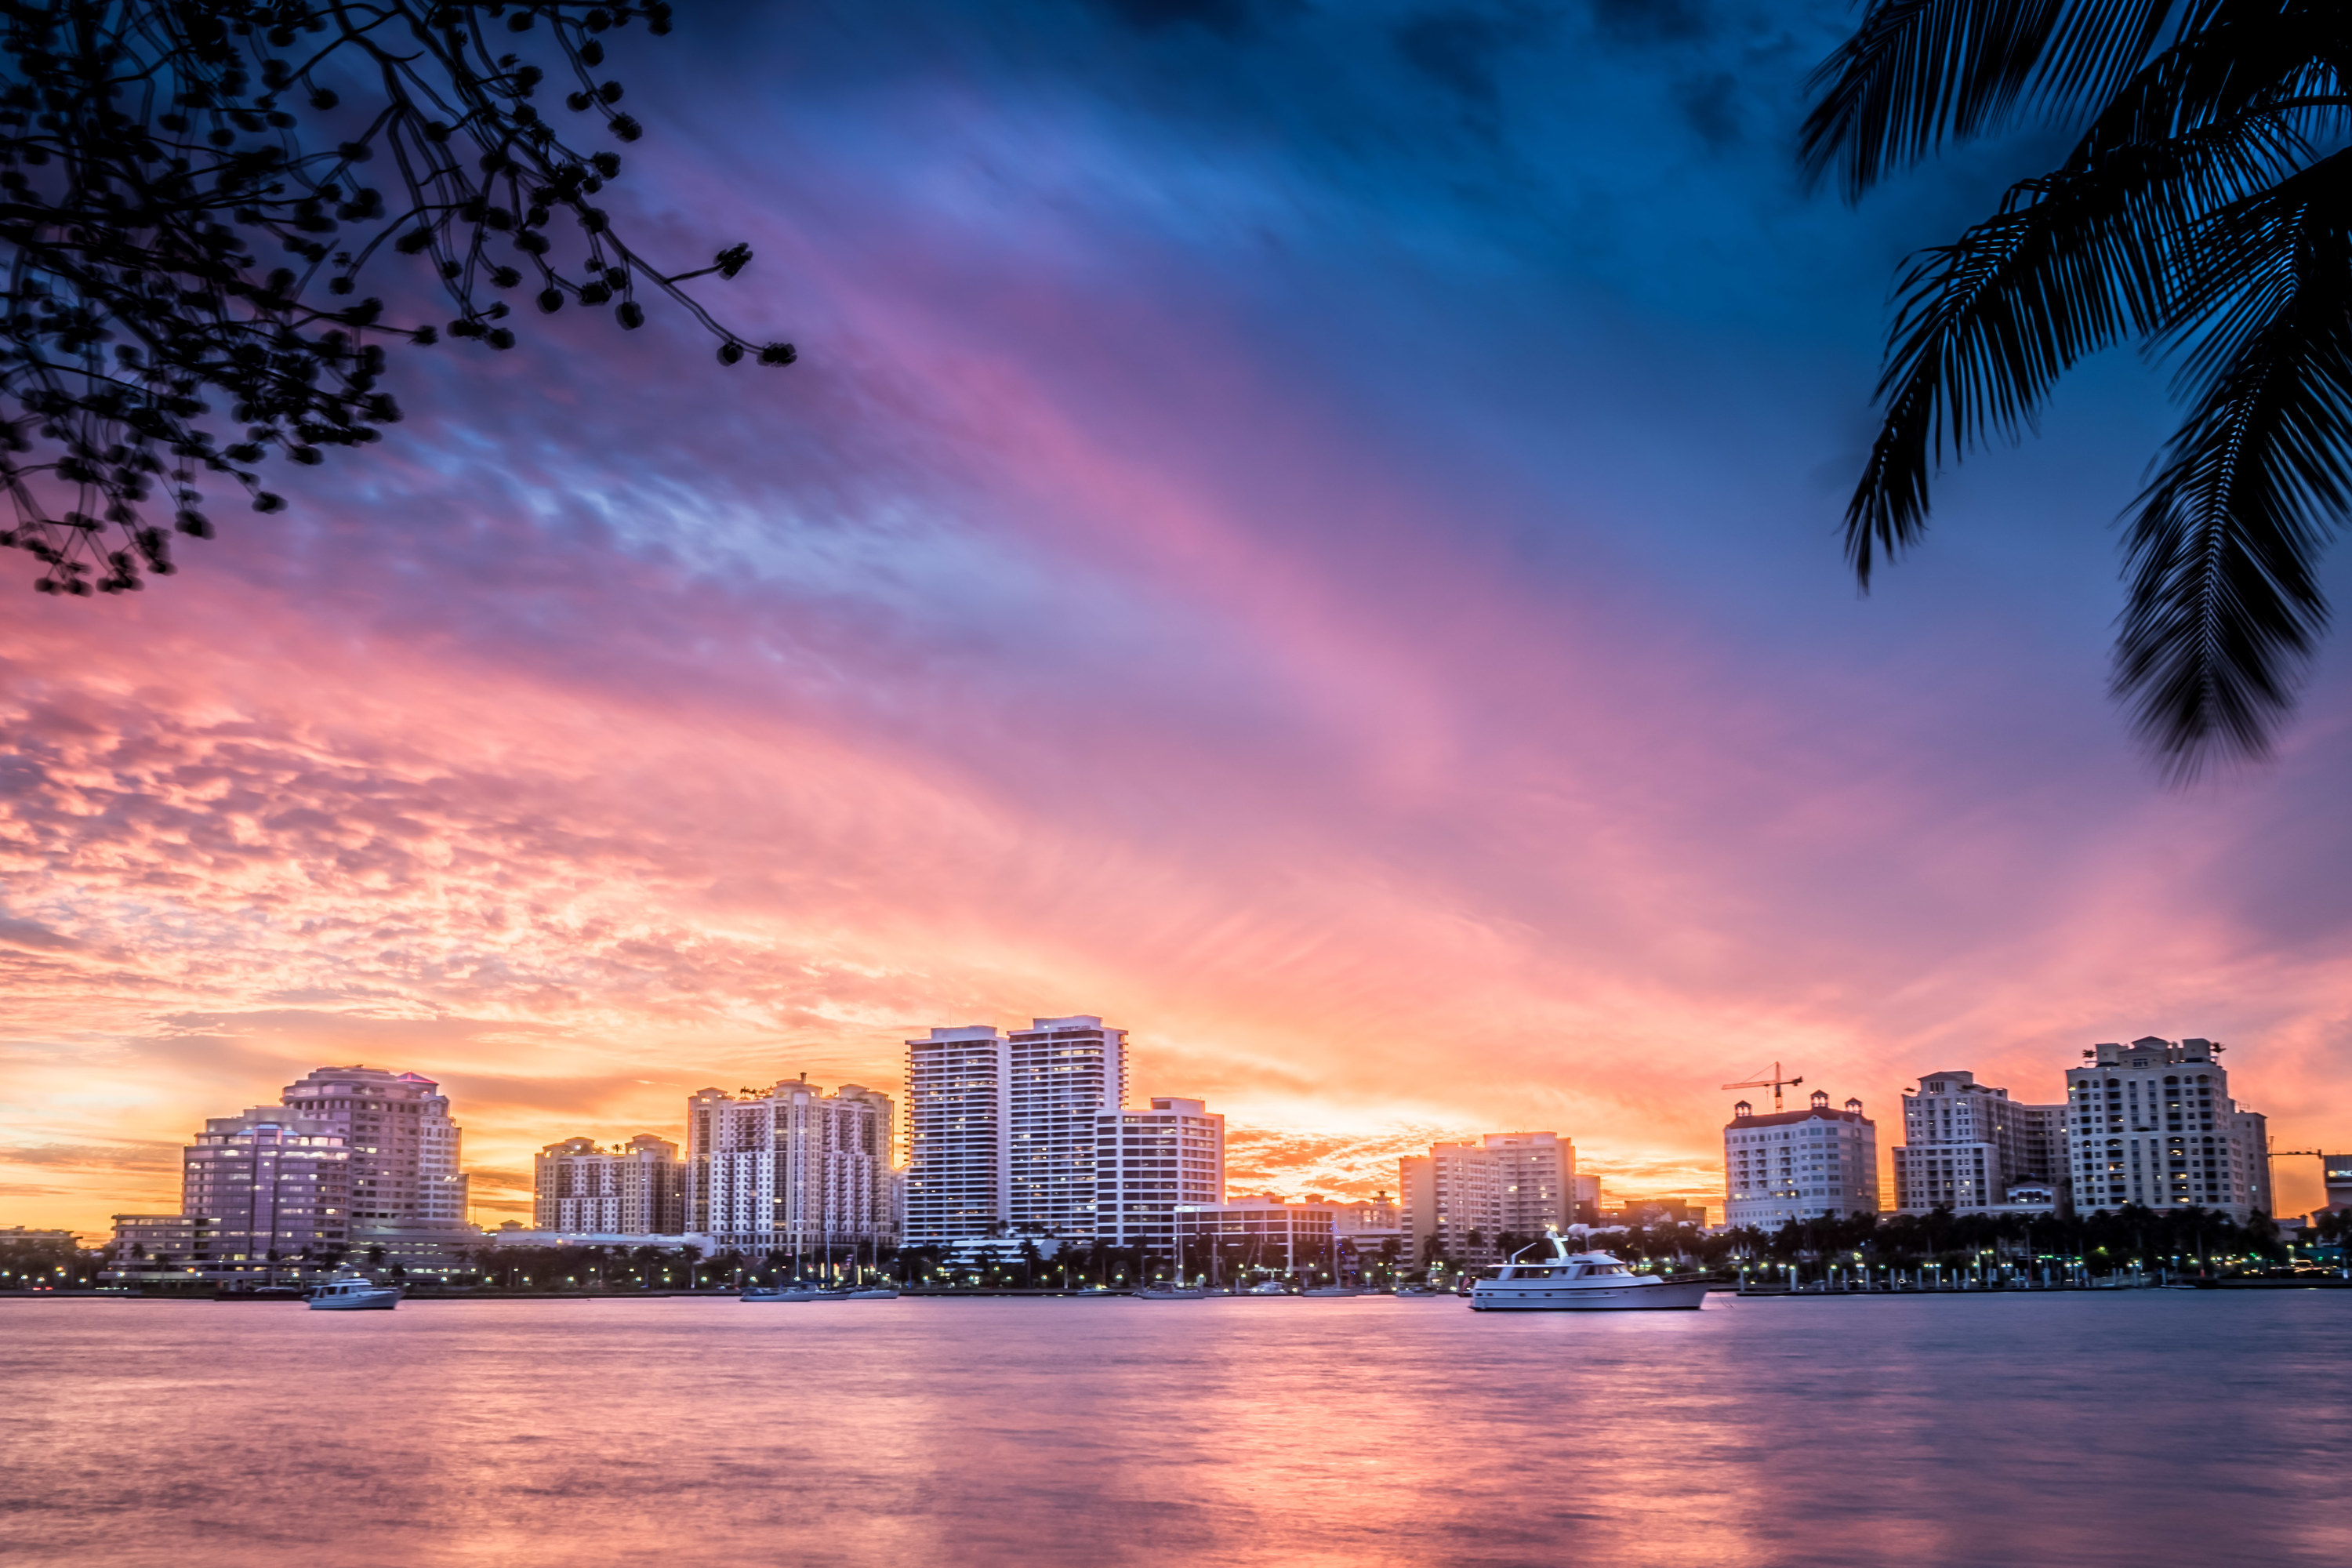 West Palm Beach at sunset